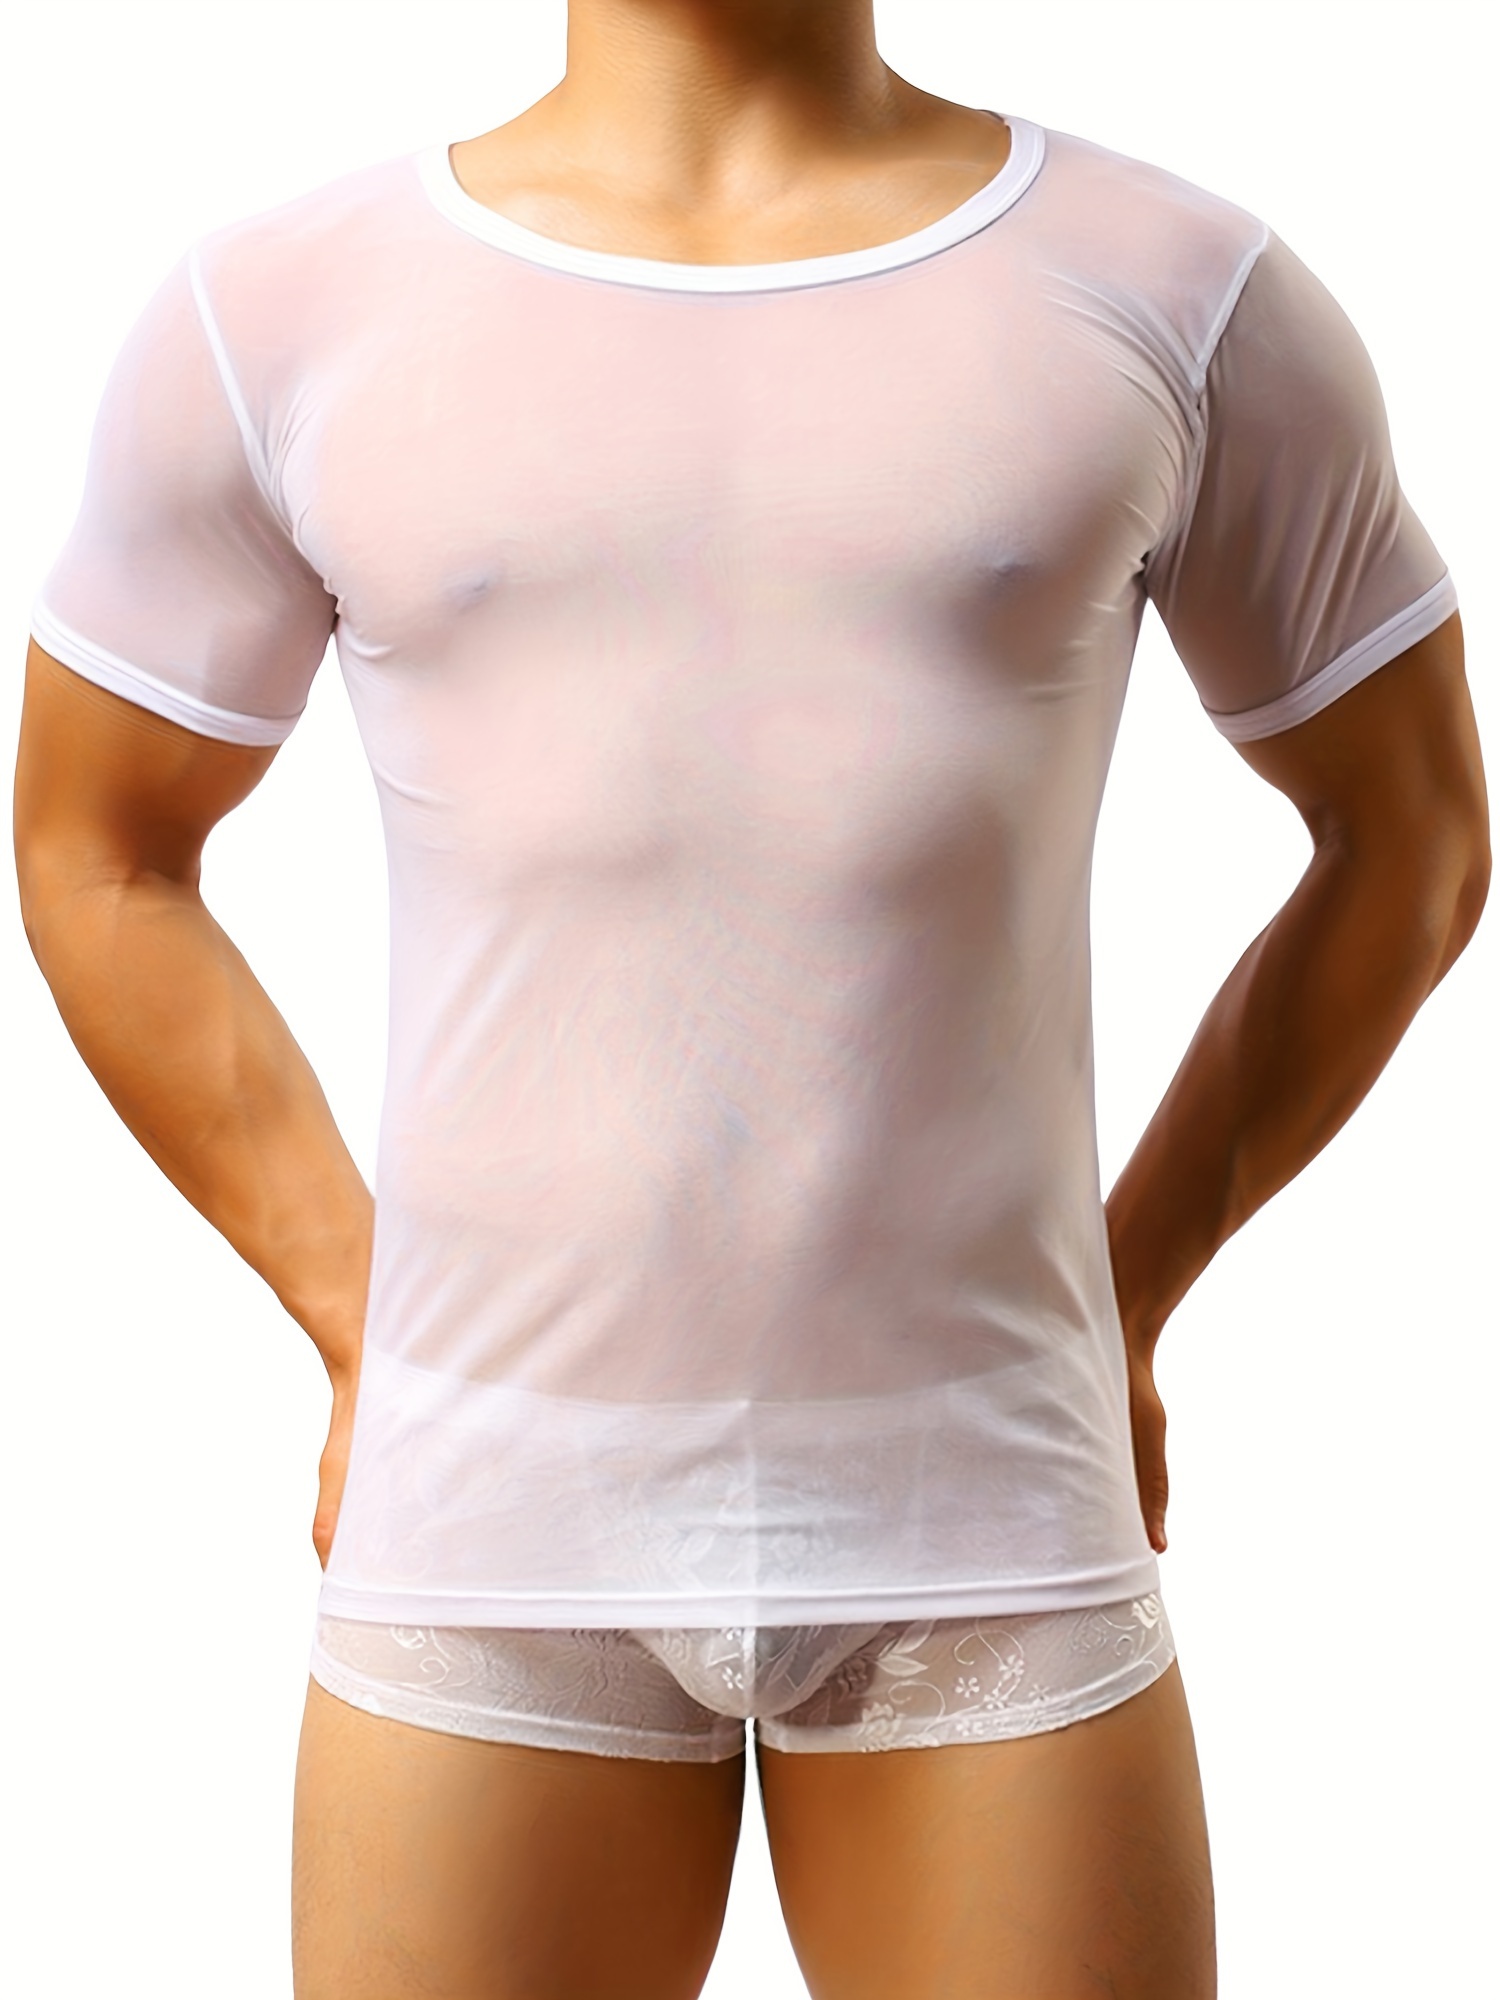 YUFEIDA Men's Sexy Underwear T-Shirt Short Sleeve Mesh Sheer Top